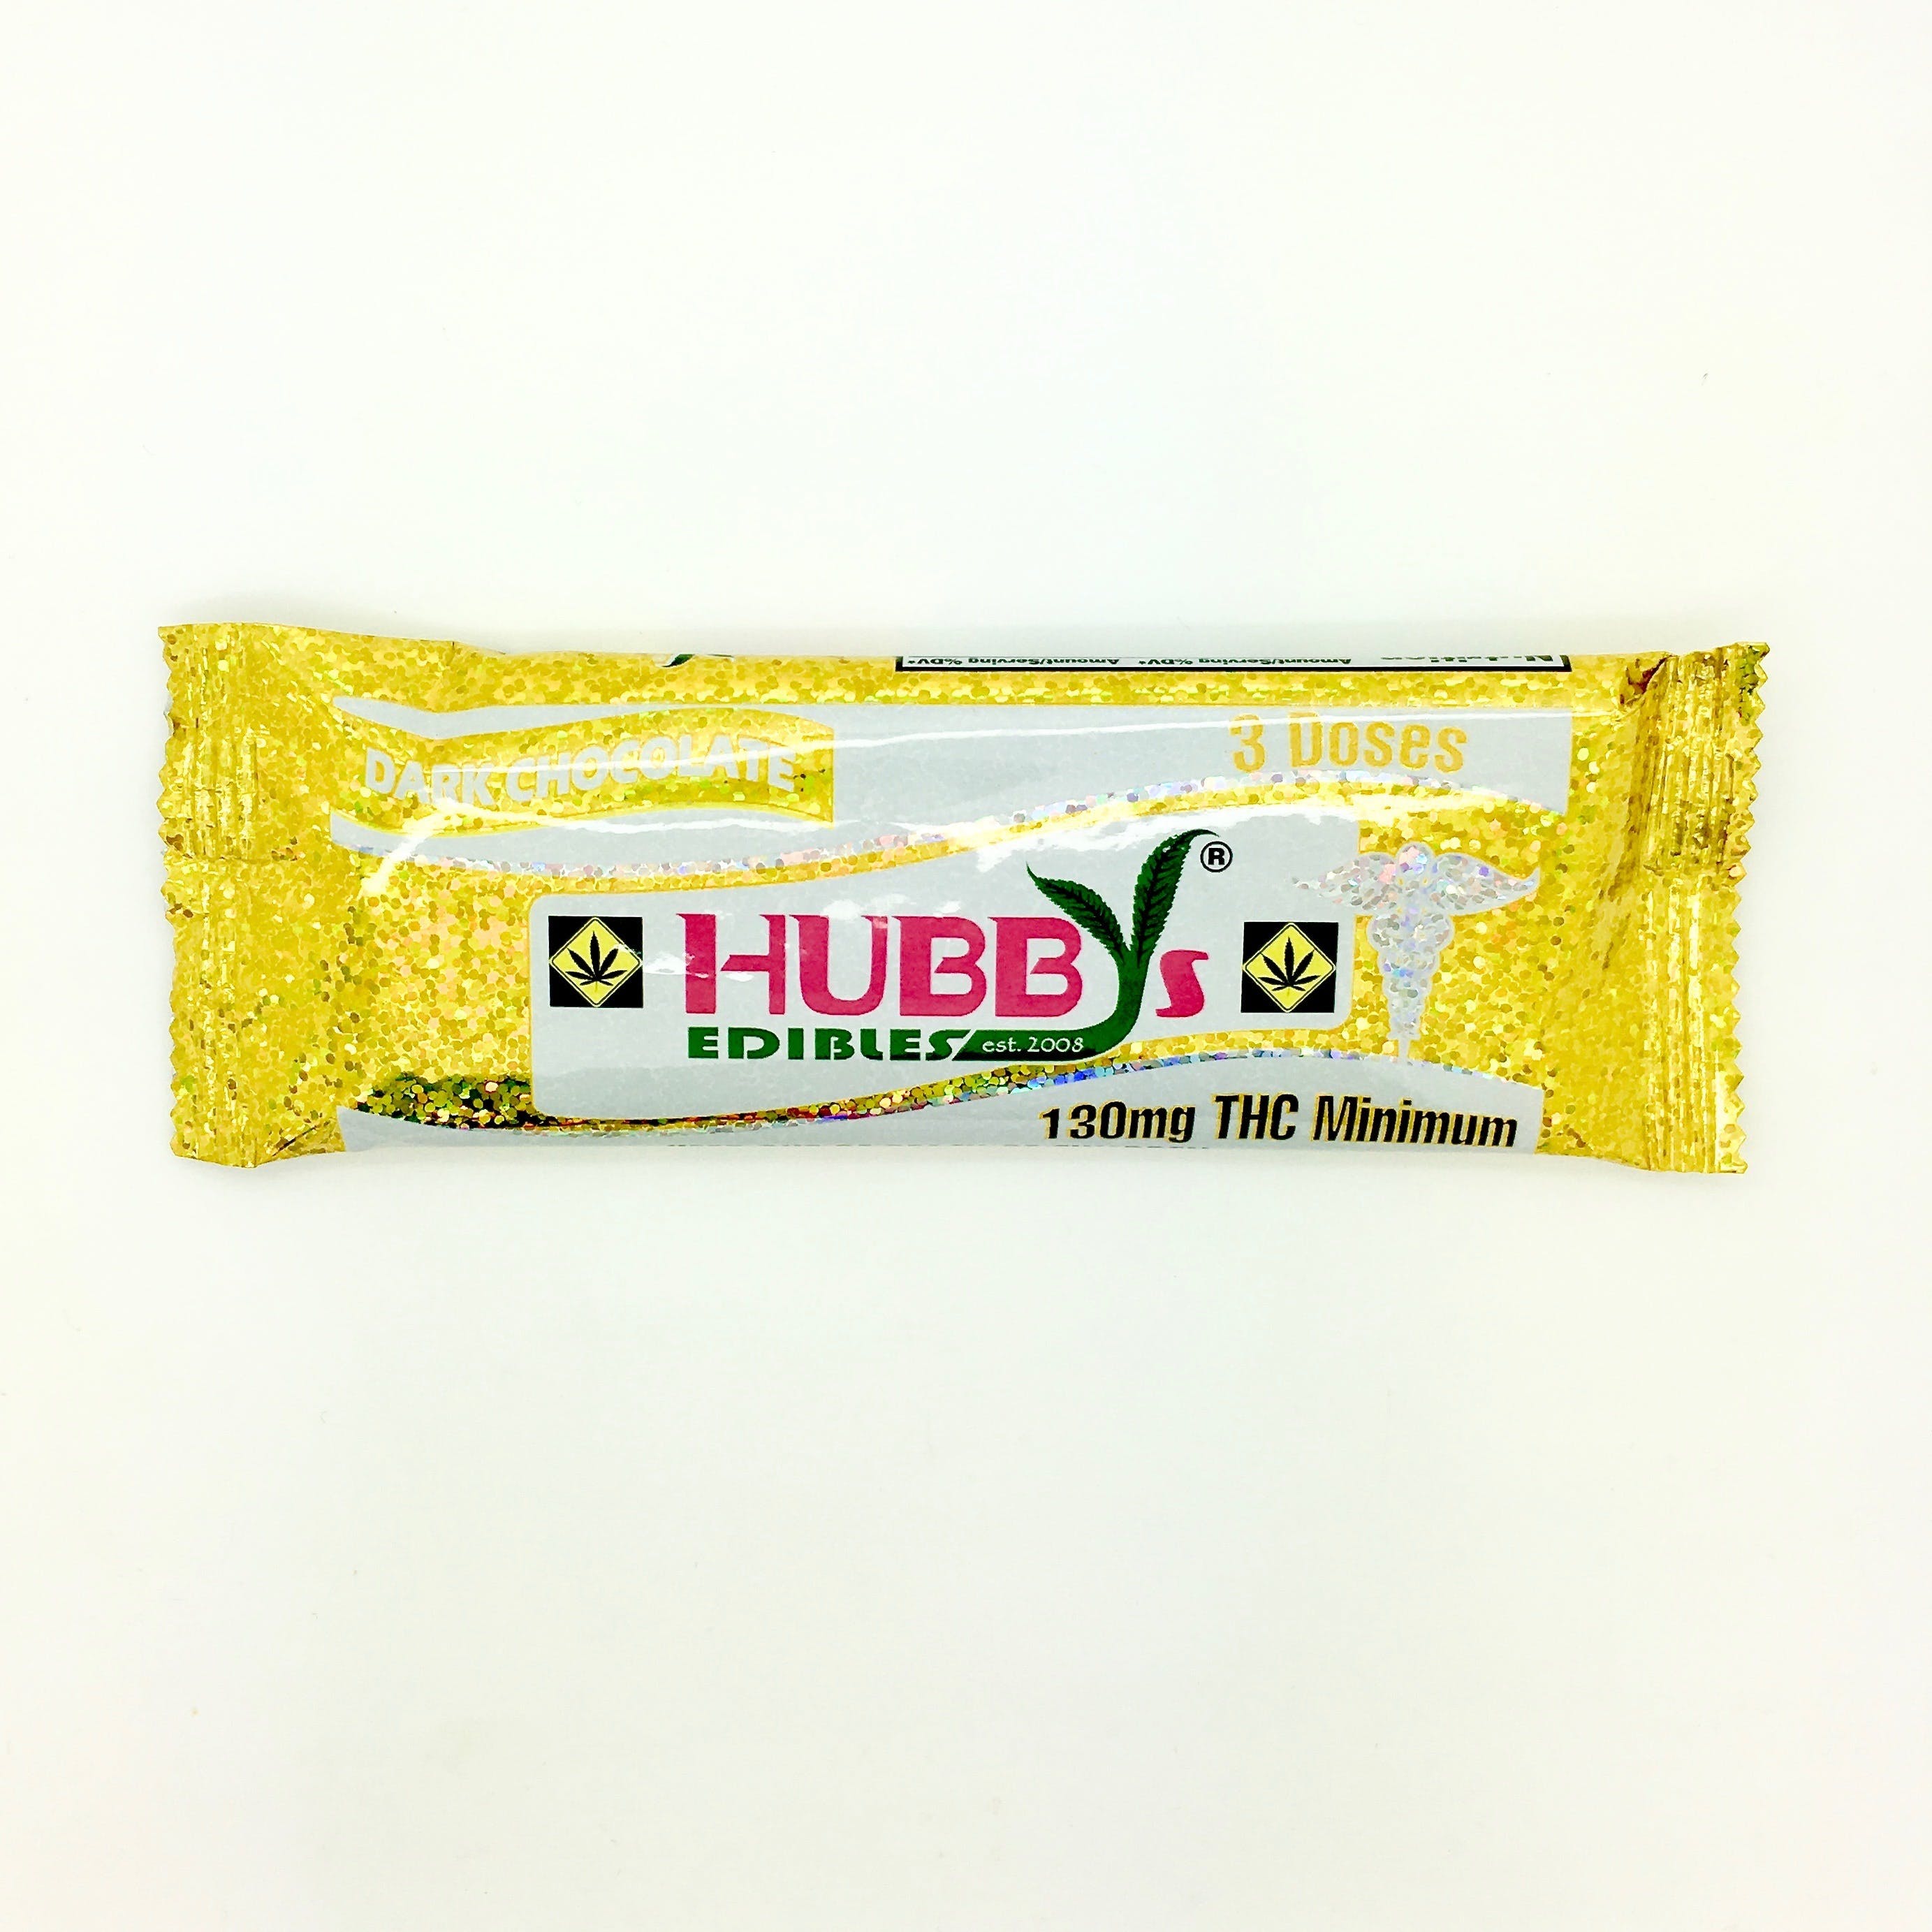 HUBBY'S EDIBLES - DARK CHOCOLATE - 130 MG